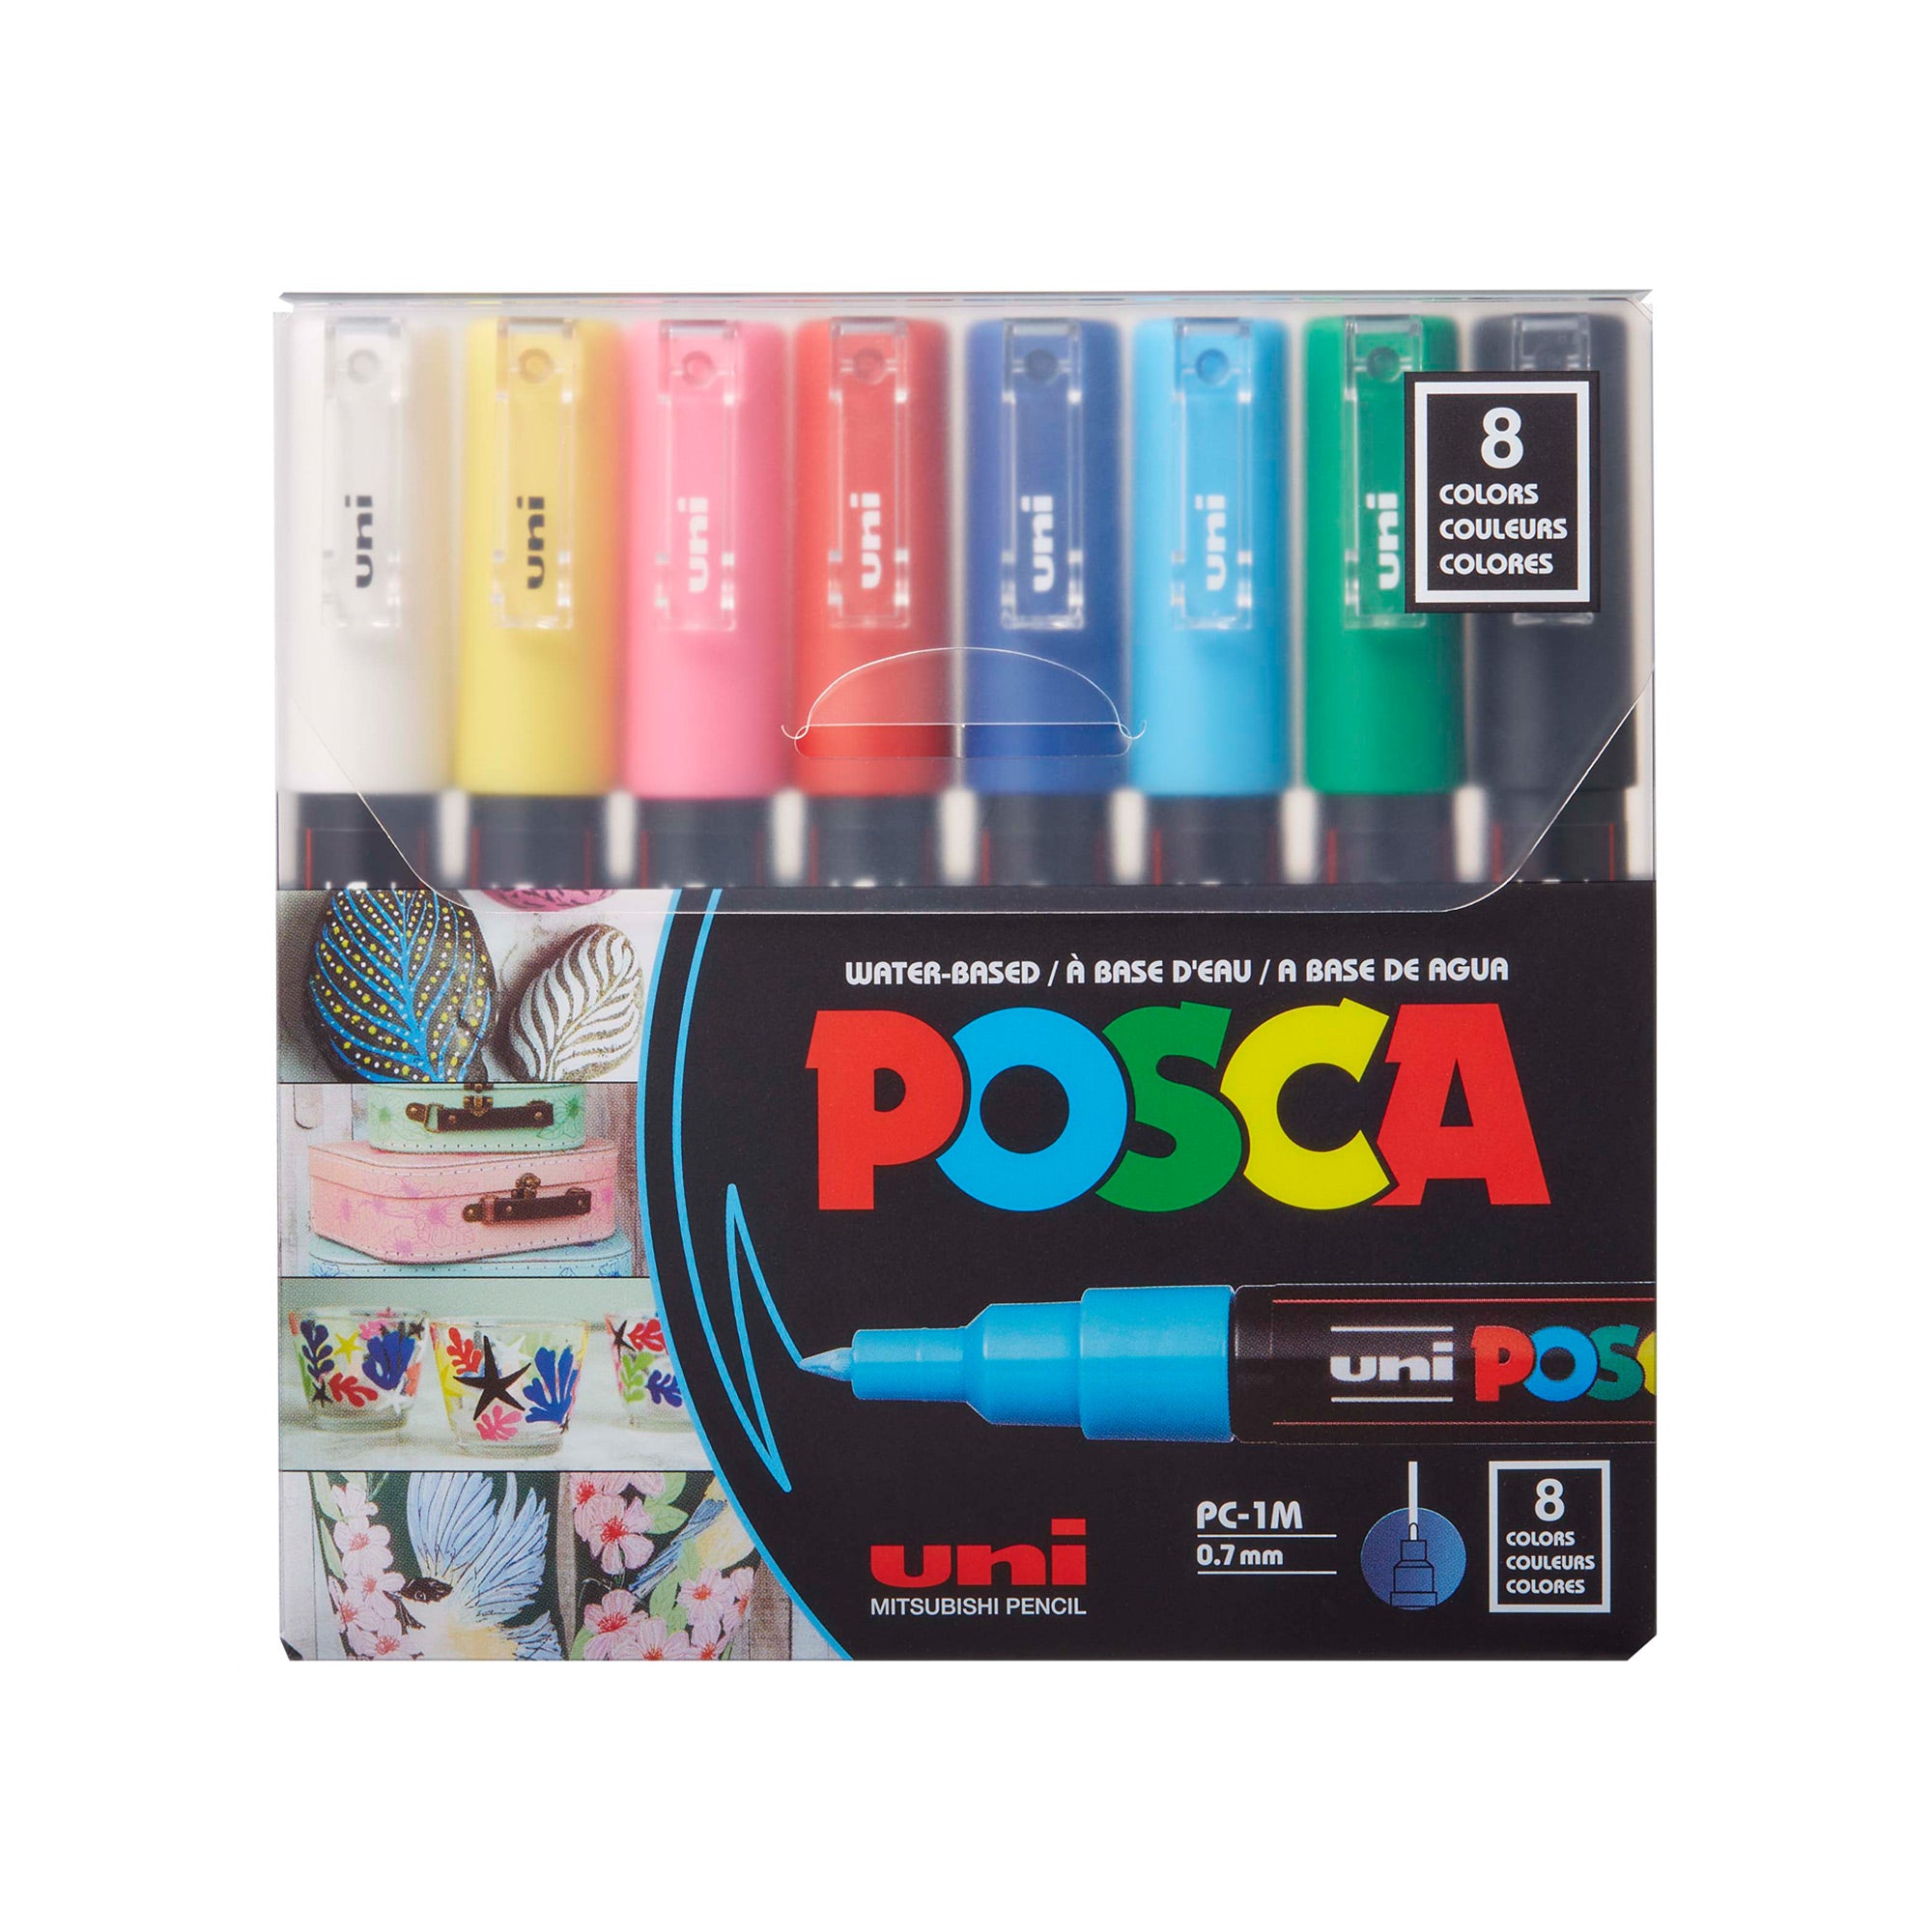 Posca Acrylic Paint Marker Set- Set of 8 White Assorted Tips